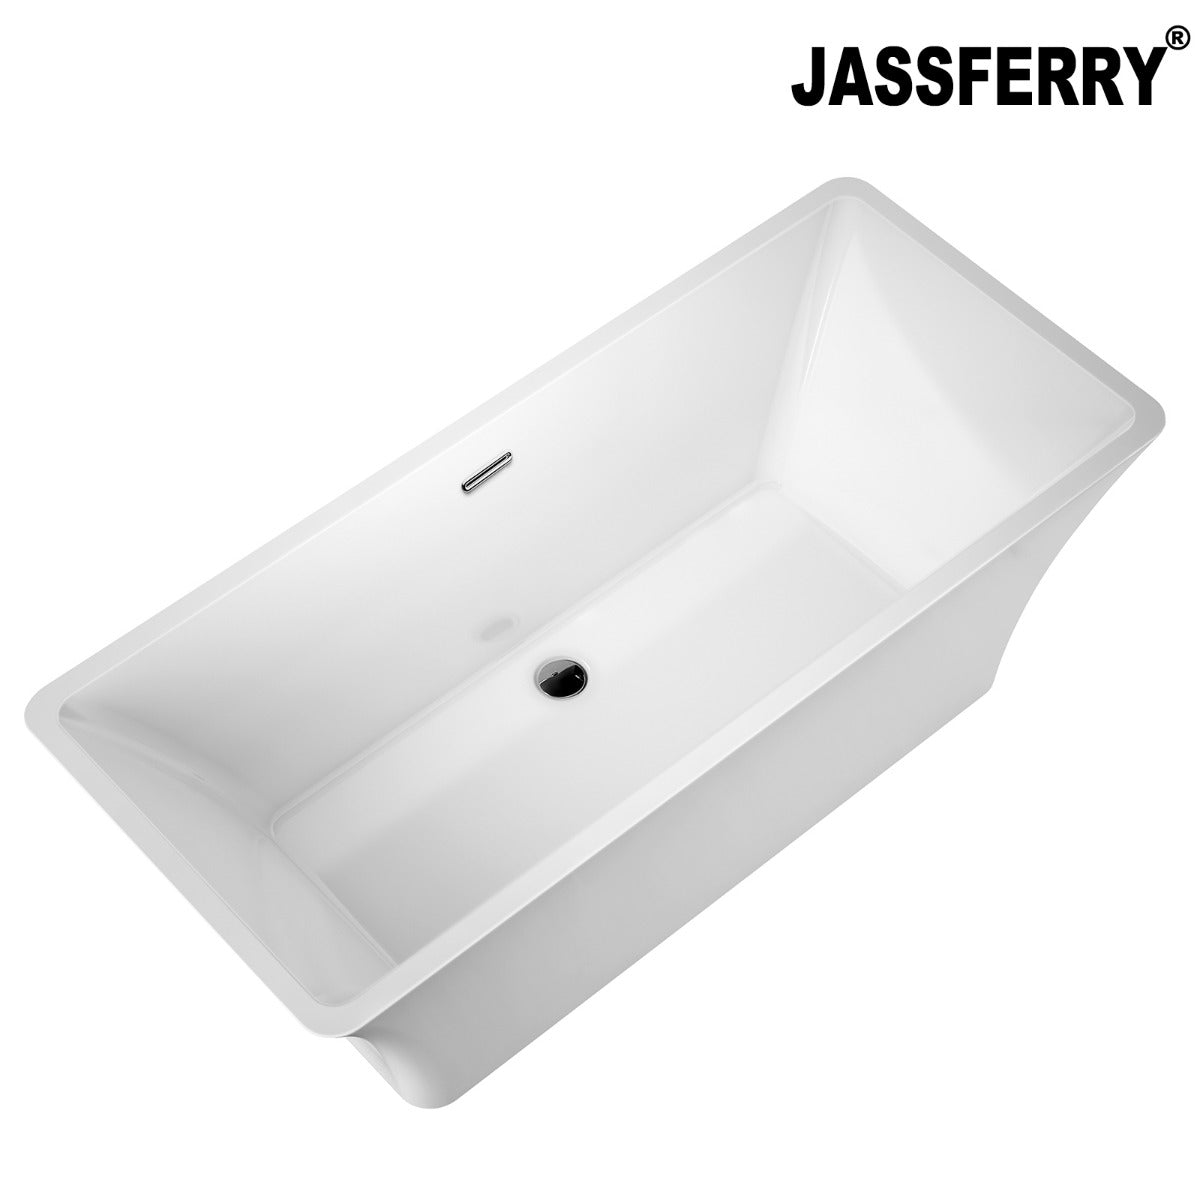 JassferryJASSFERRY Contemporary Freestanding Bathtub Luxury Rectangular Hourglass DesignBathtubs